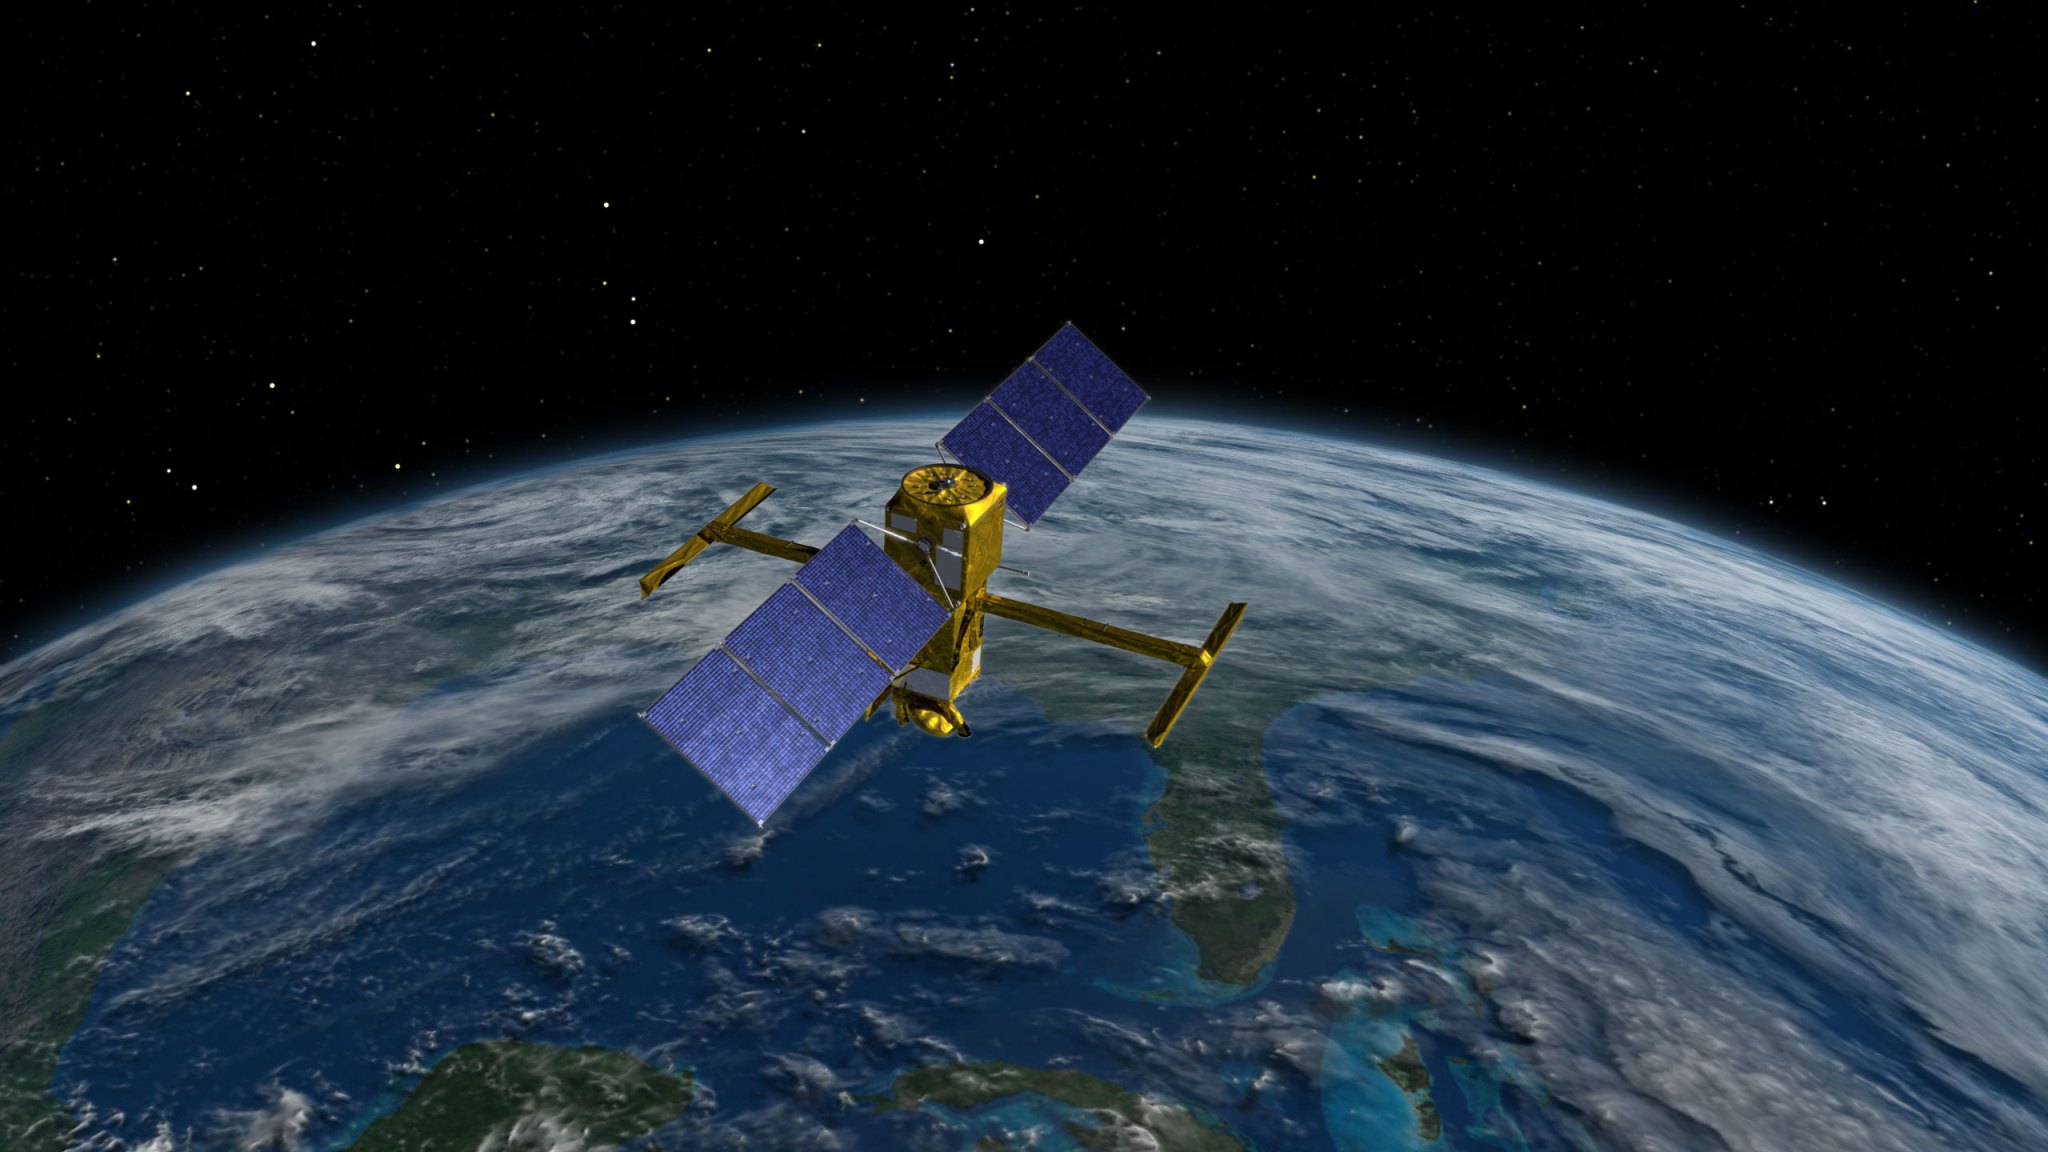 Illustration shows the SWOT satellite in orbit around Earth